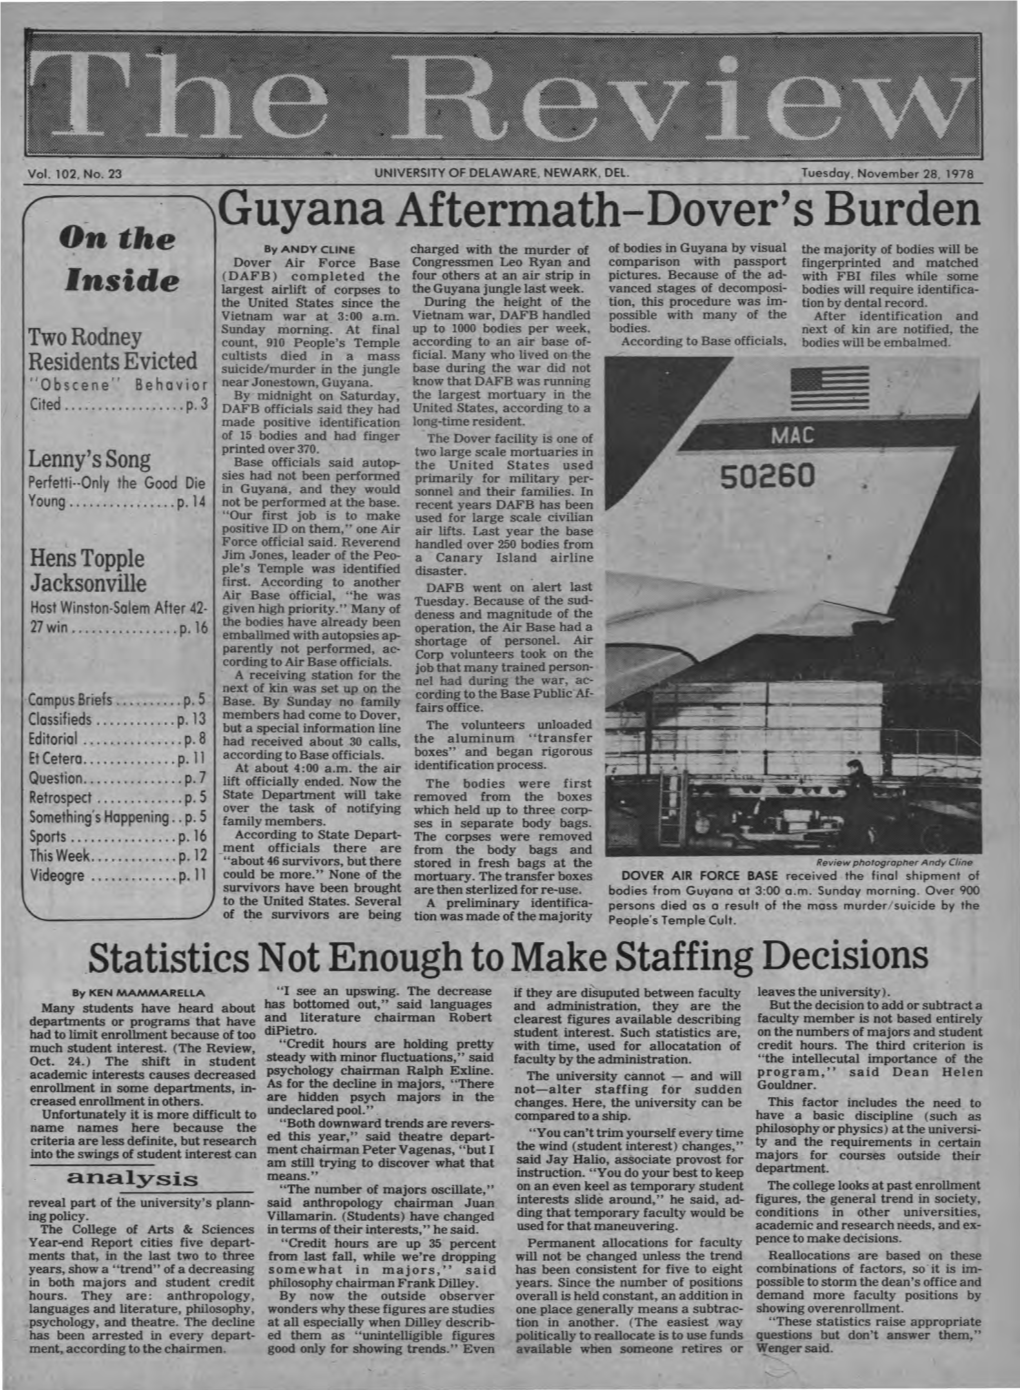 Guyana Aftermath-Dover's Burden